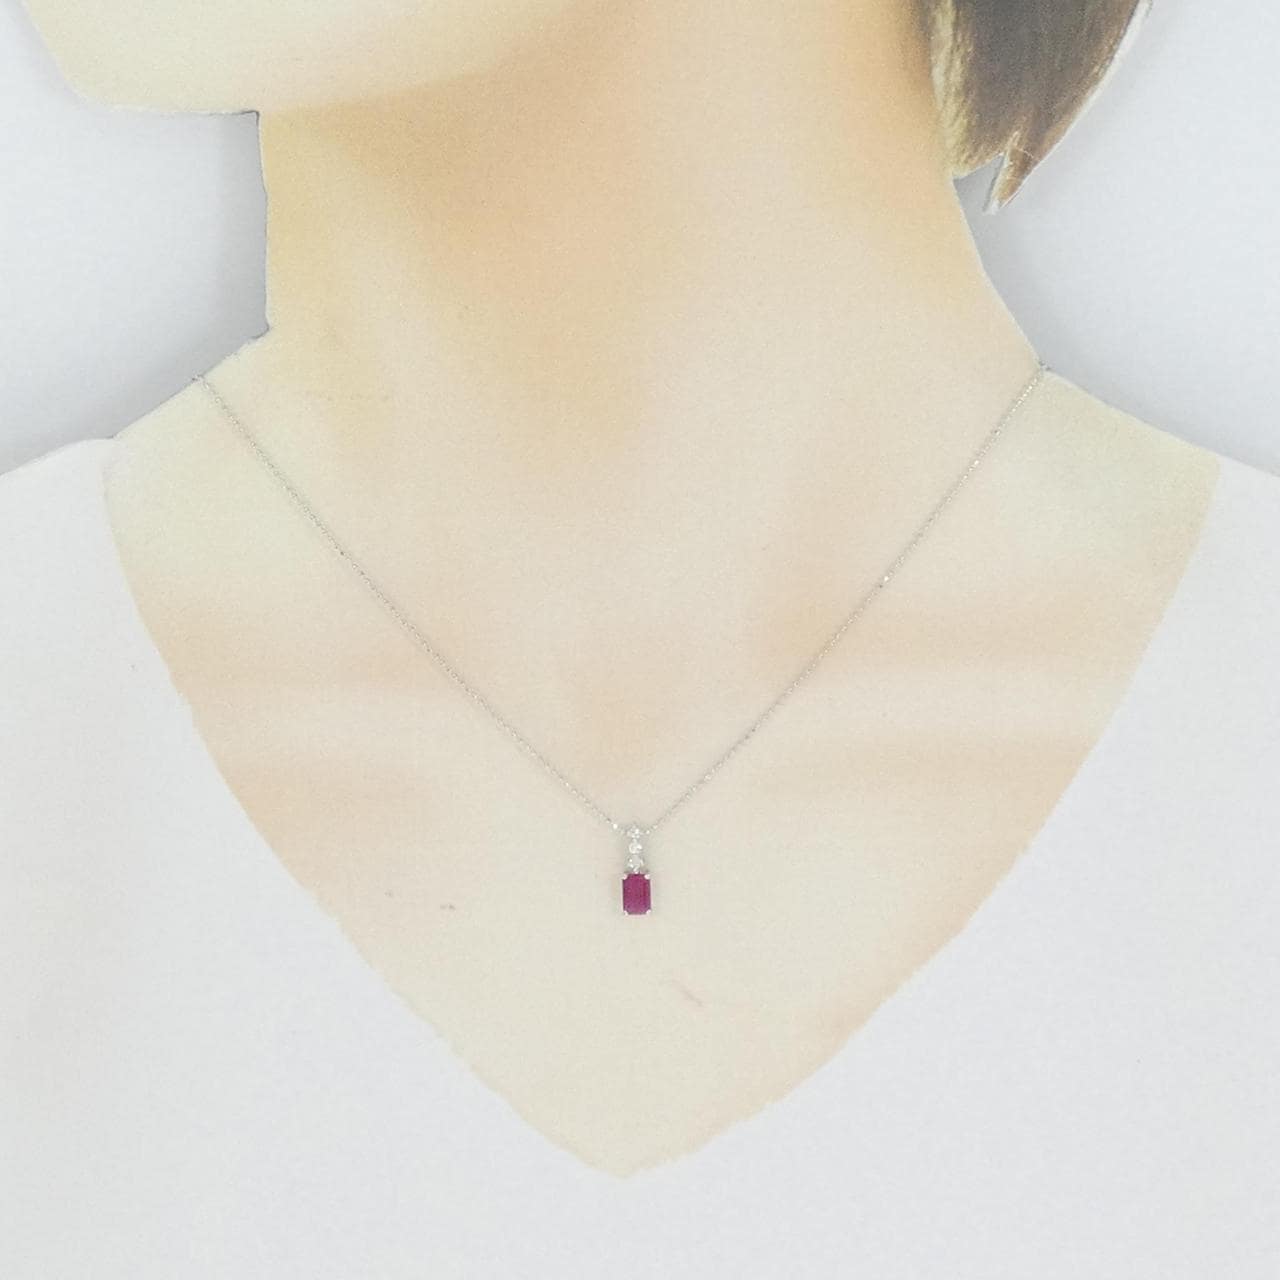 K18WG ruby necklace